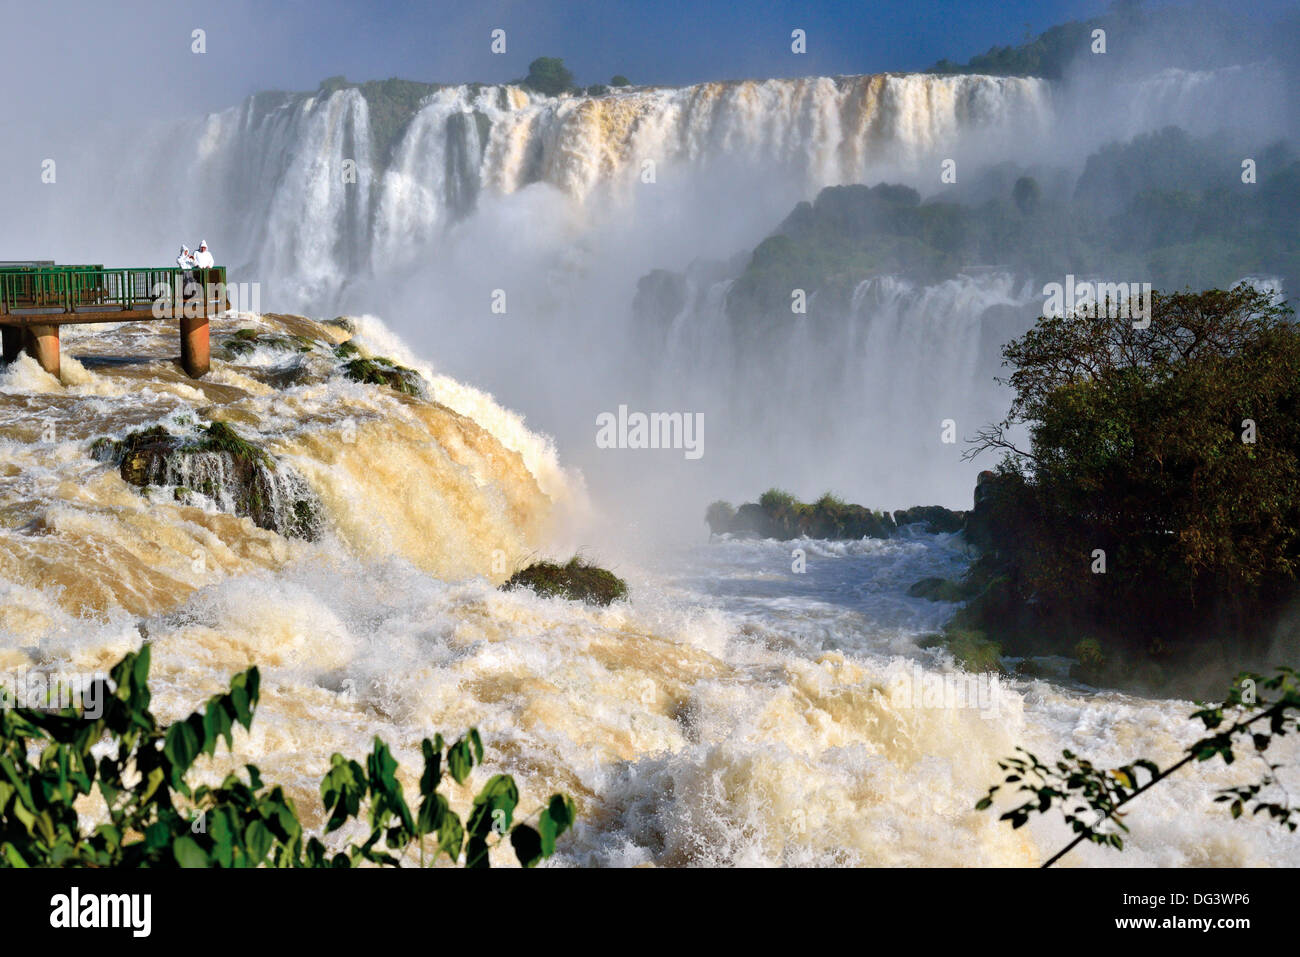 Brazil, Iguassu National Park : Tourists on viewing platform appreciating the enormous water volumes of Iguassu Falls Stock Photo